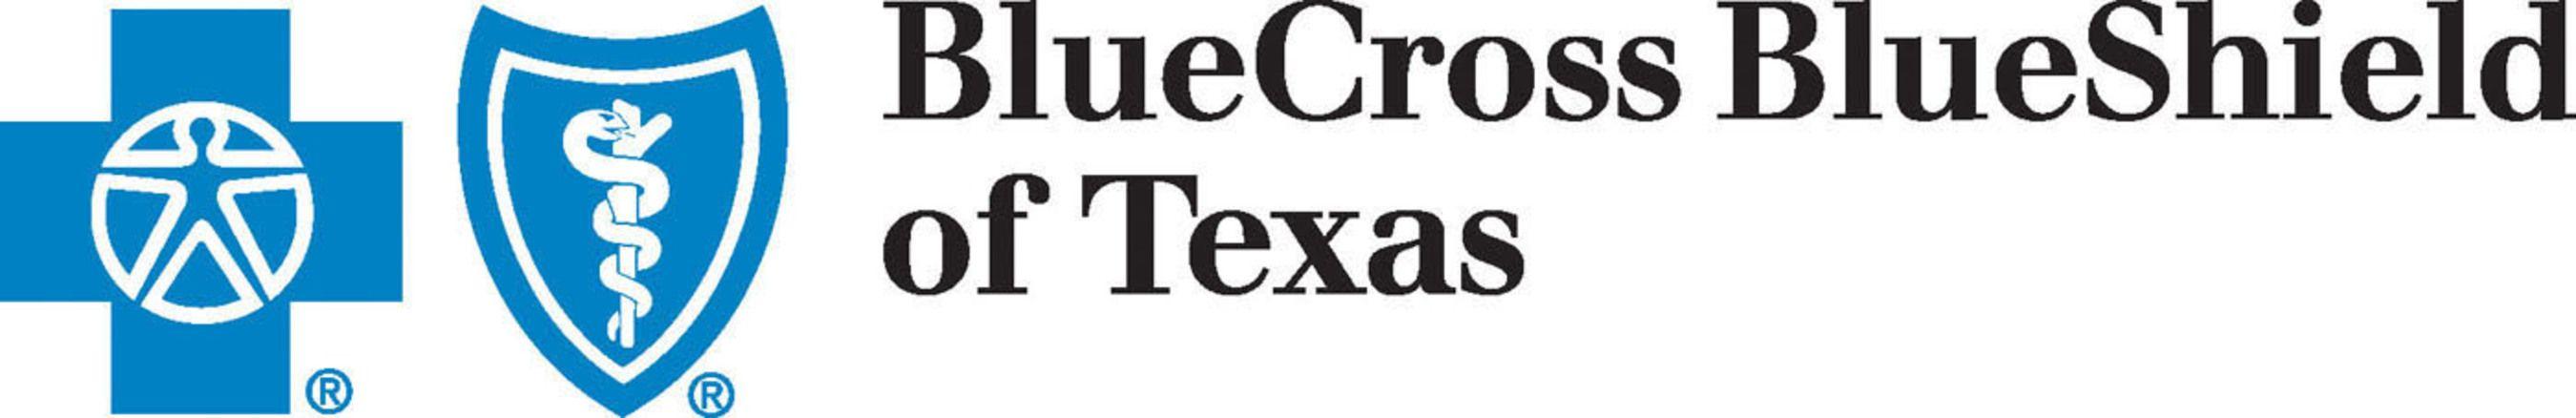 Blue Cross Blue Shield of Texas Logo - Blue Cross and Blue Shield of Texas Offers New, Coordinated Health